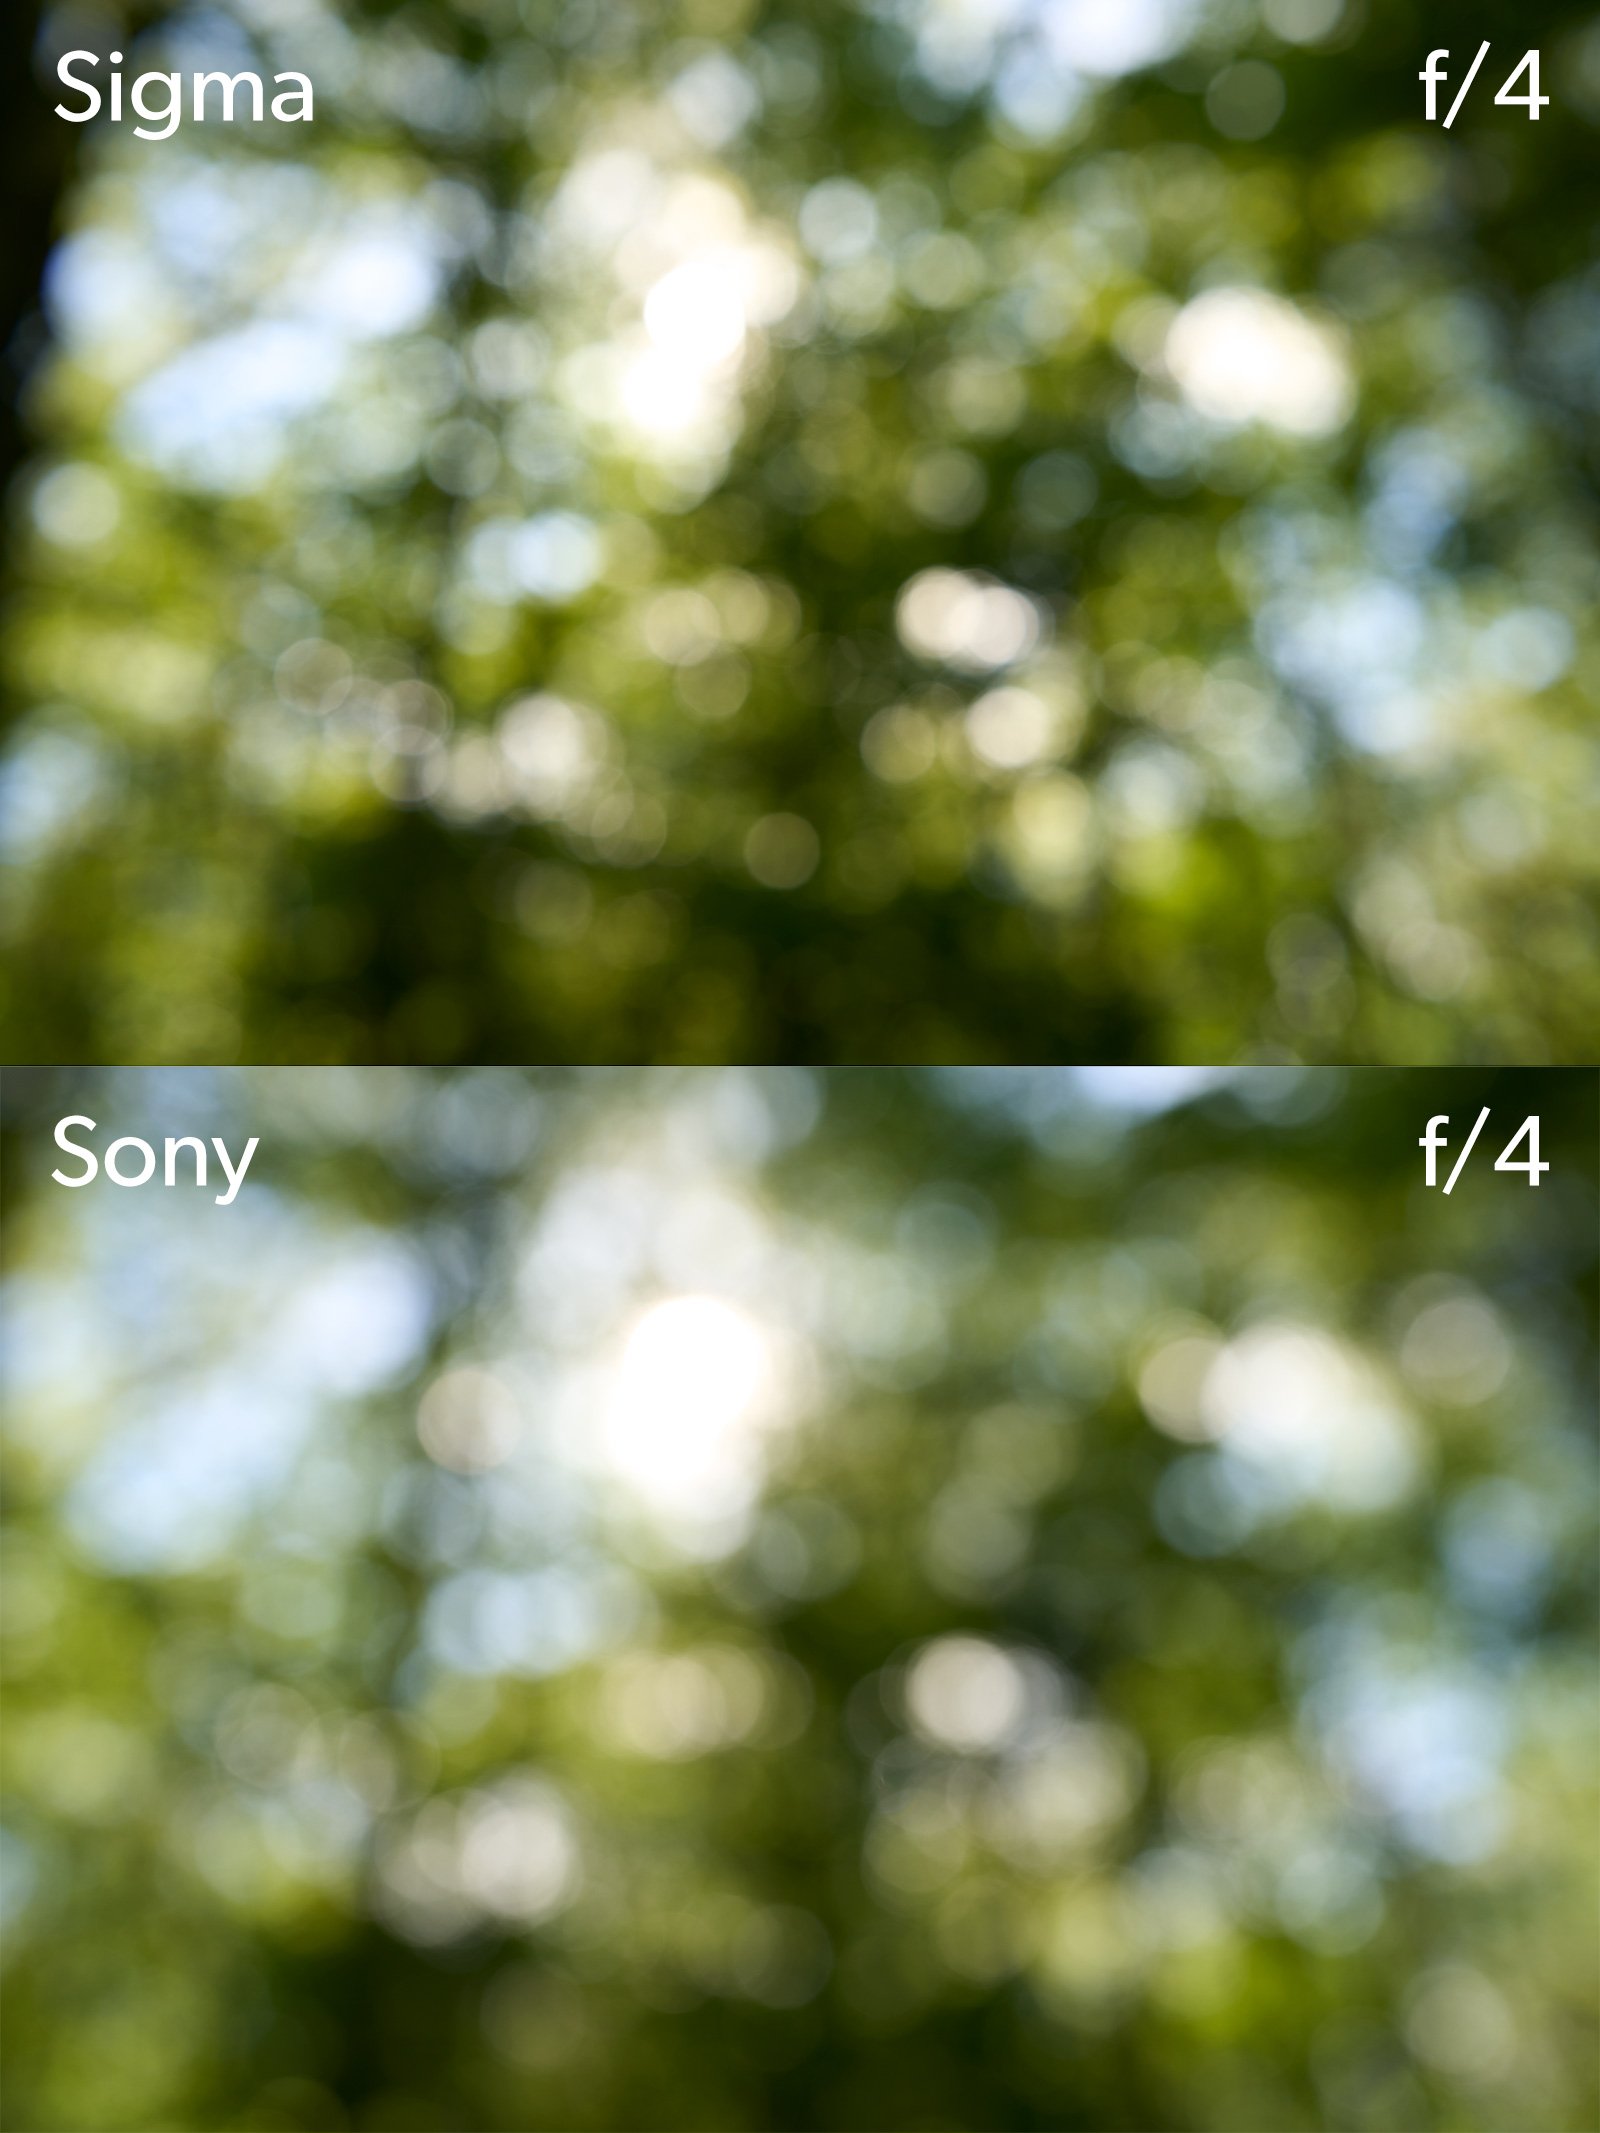 Sigma 30mm F/1.4 vs Sony 35mm F/1.8 